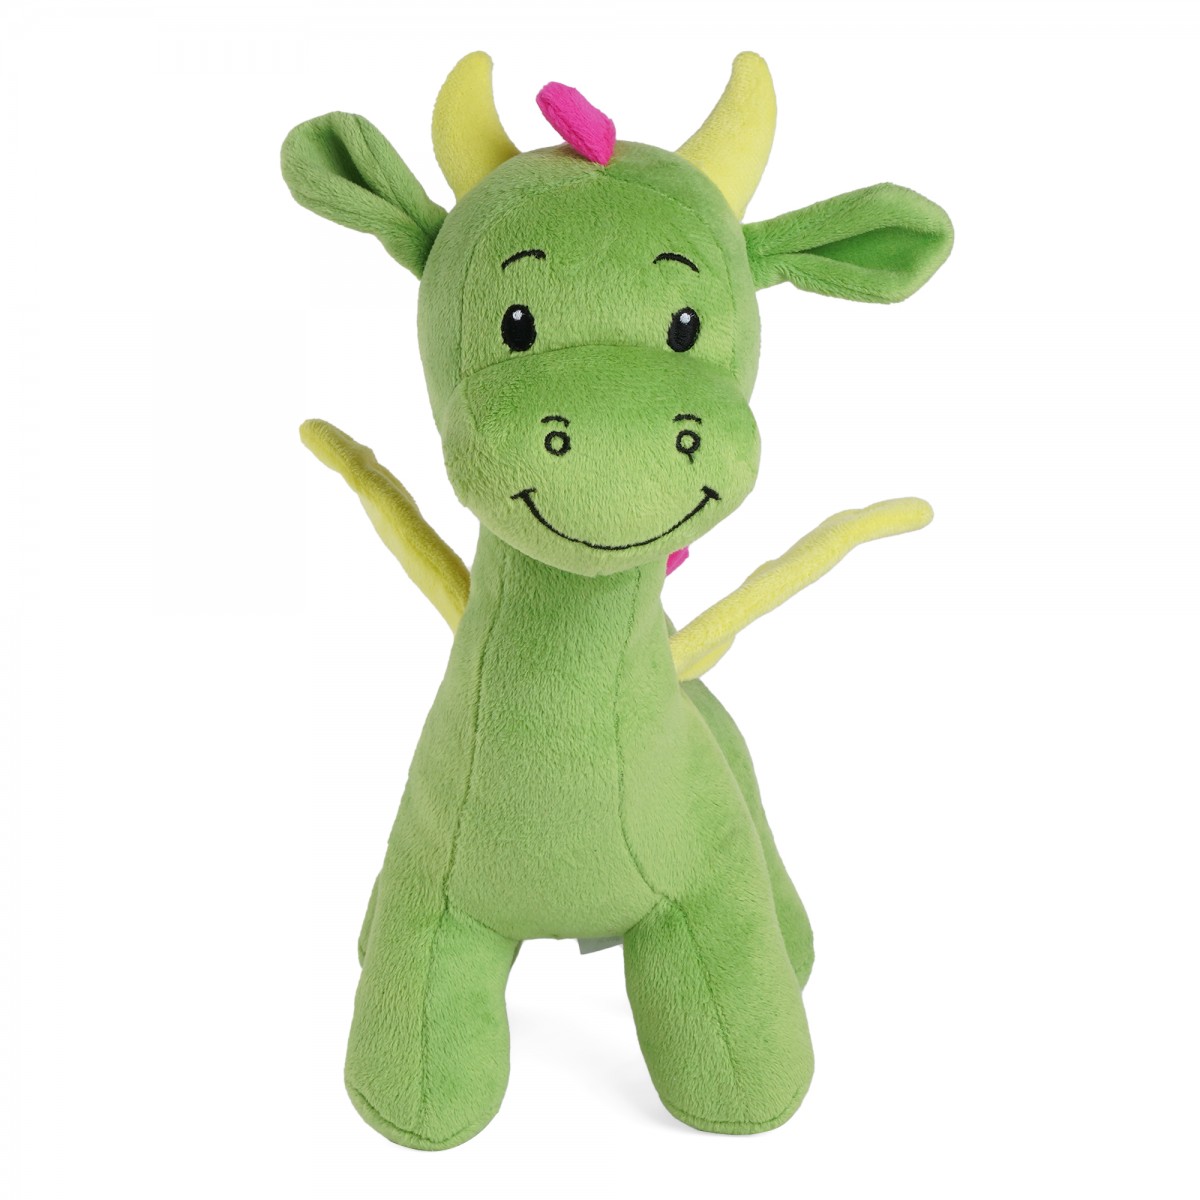 Huggable Cuddly Veto Dragon Stuffed Toy By Fuzzbuzz, Soft Toys for